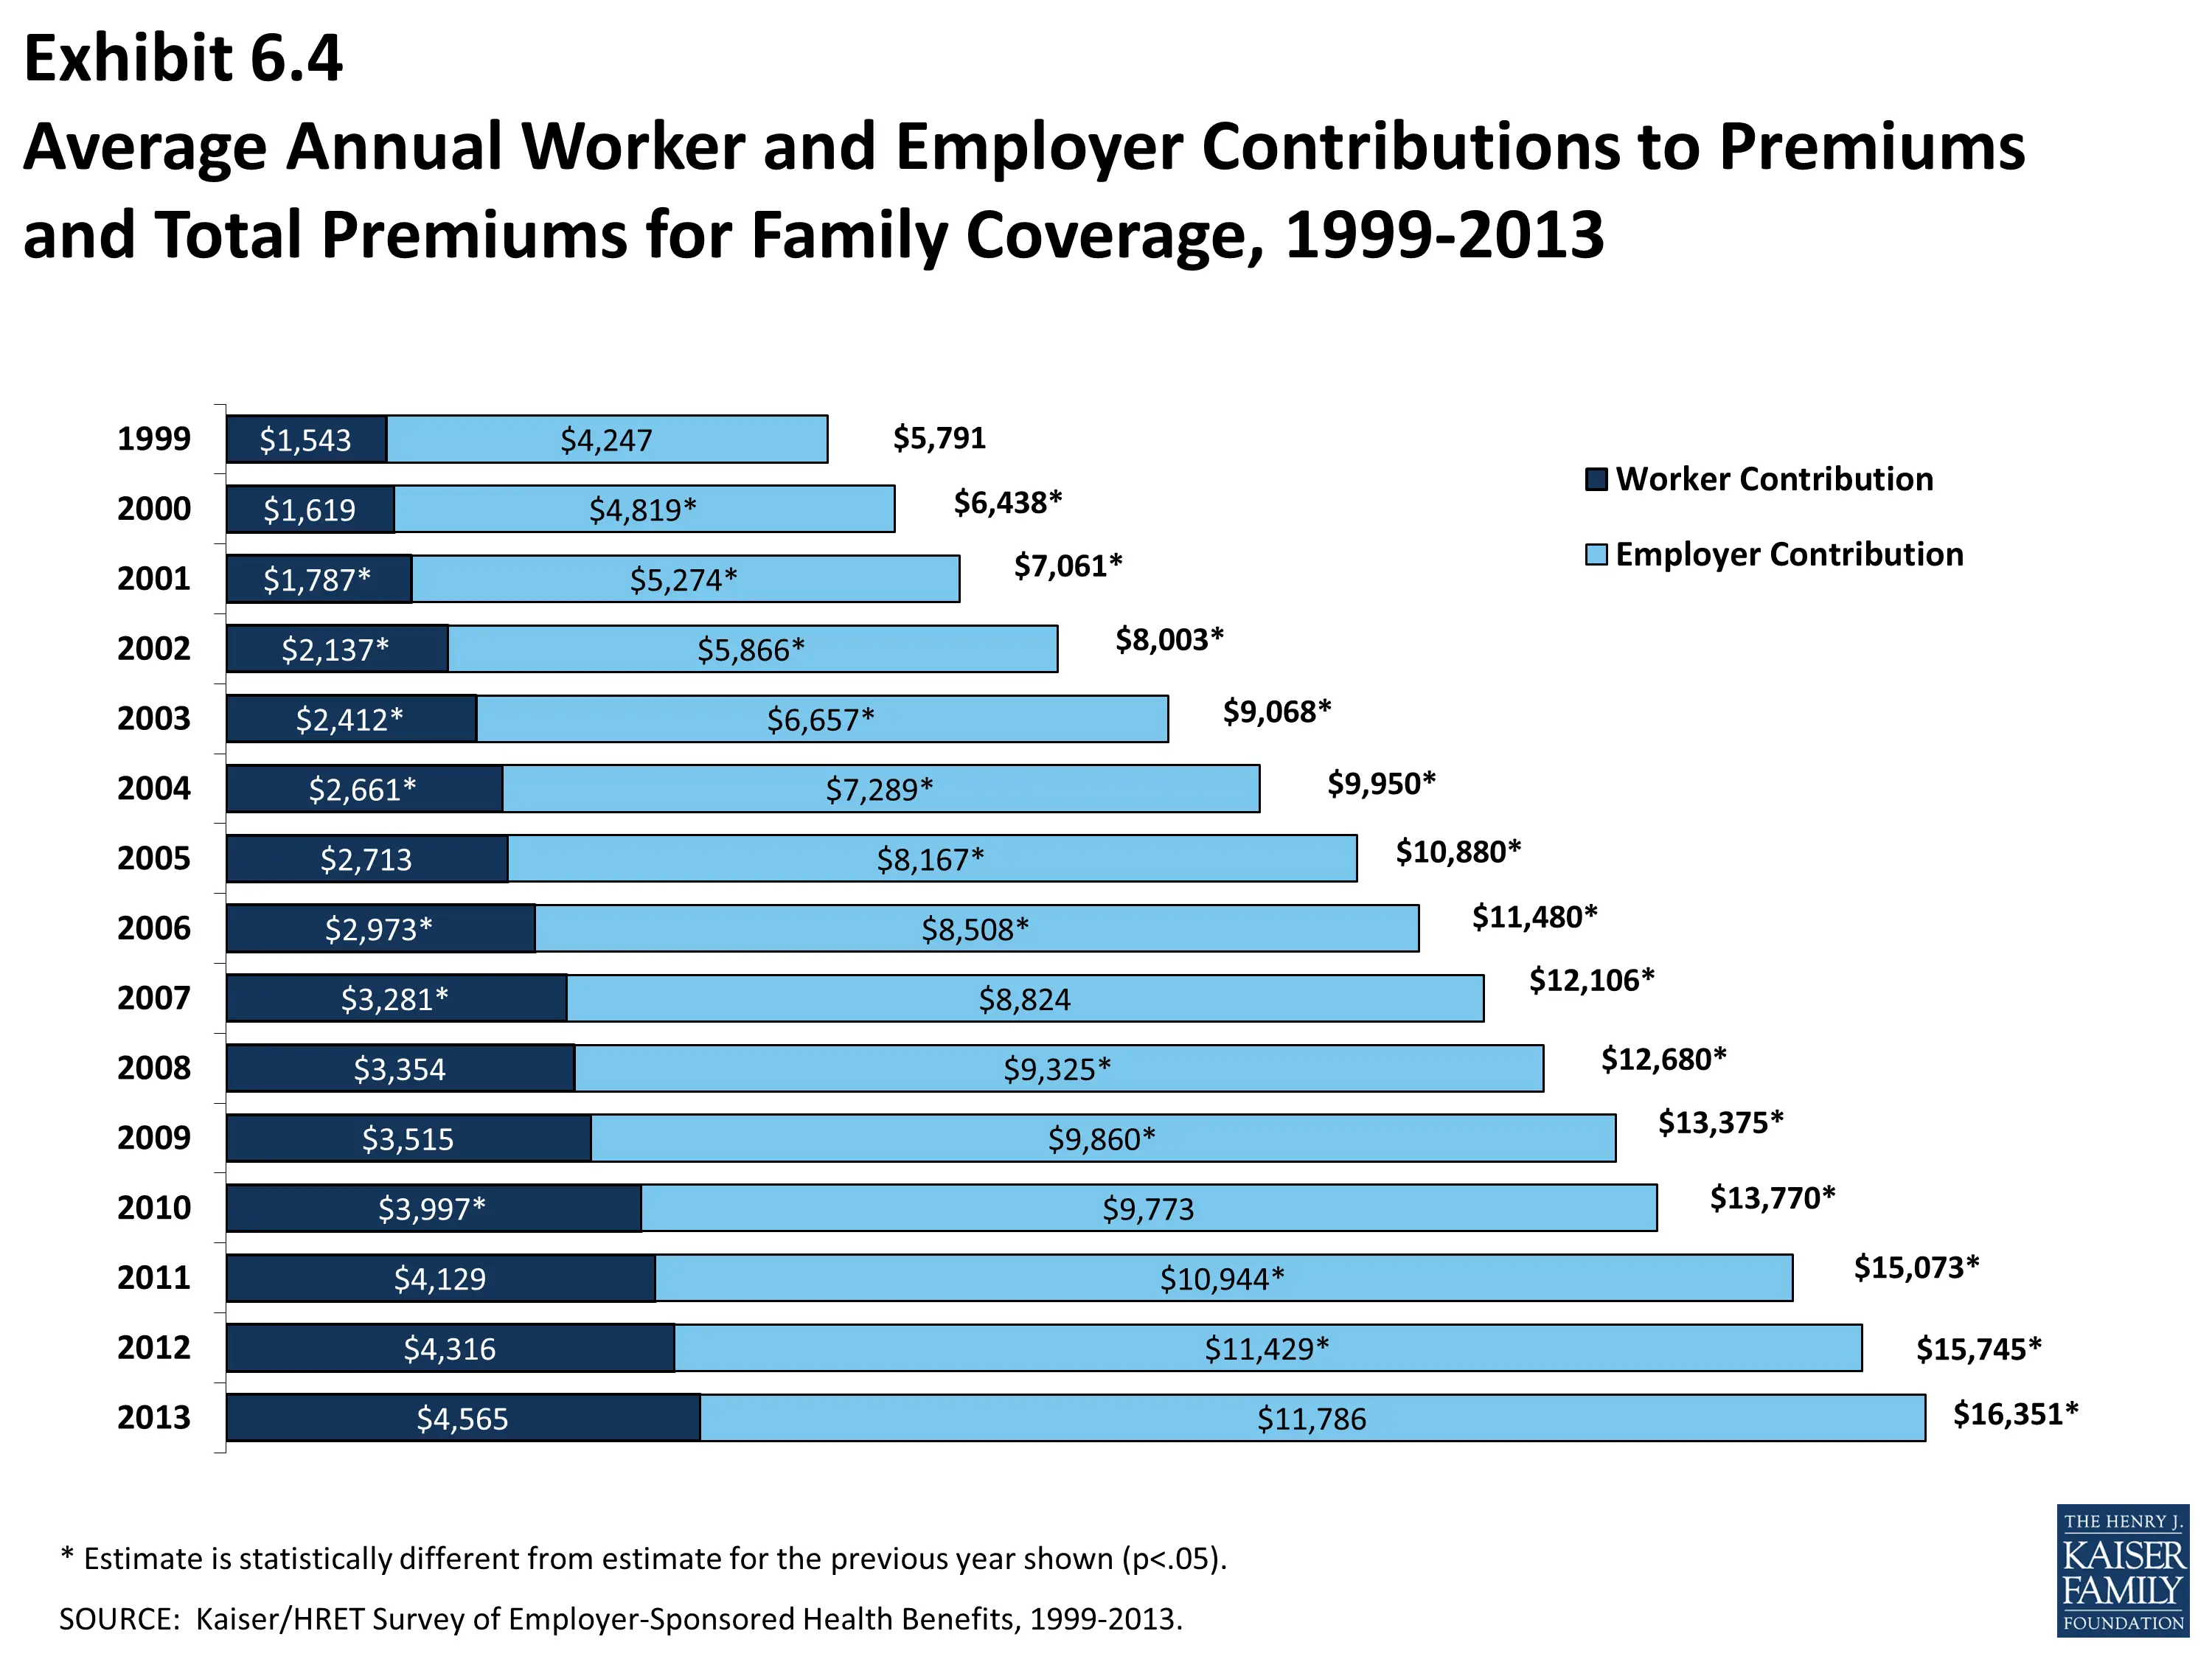 Health Insurance Average Cost Per Month